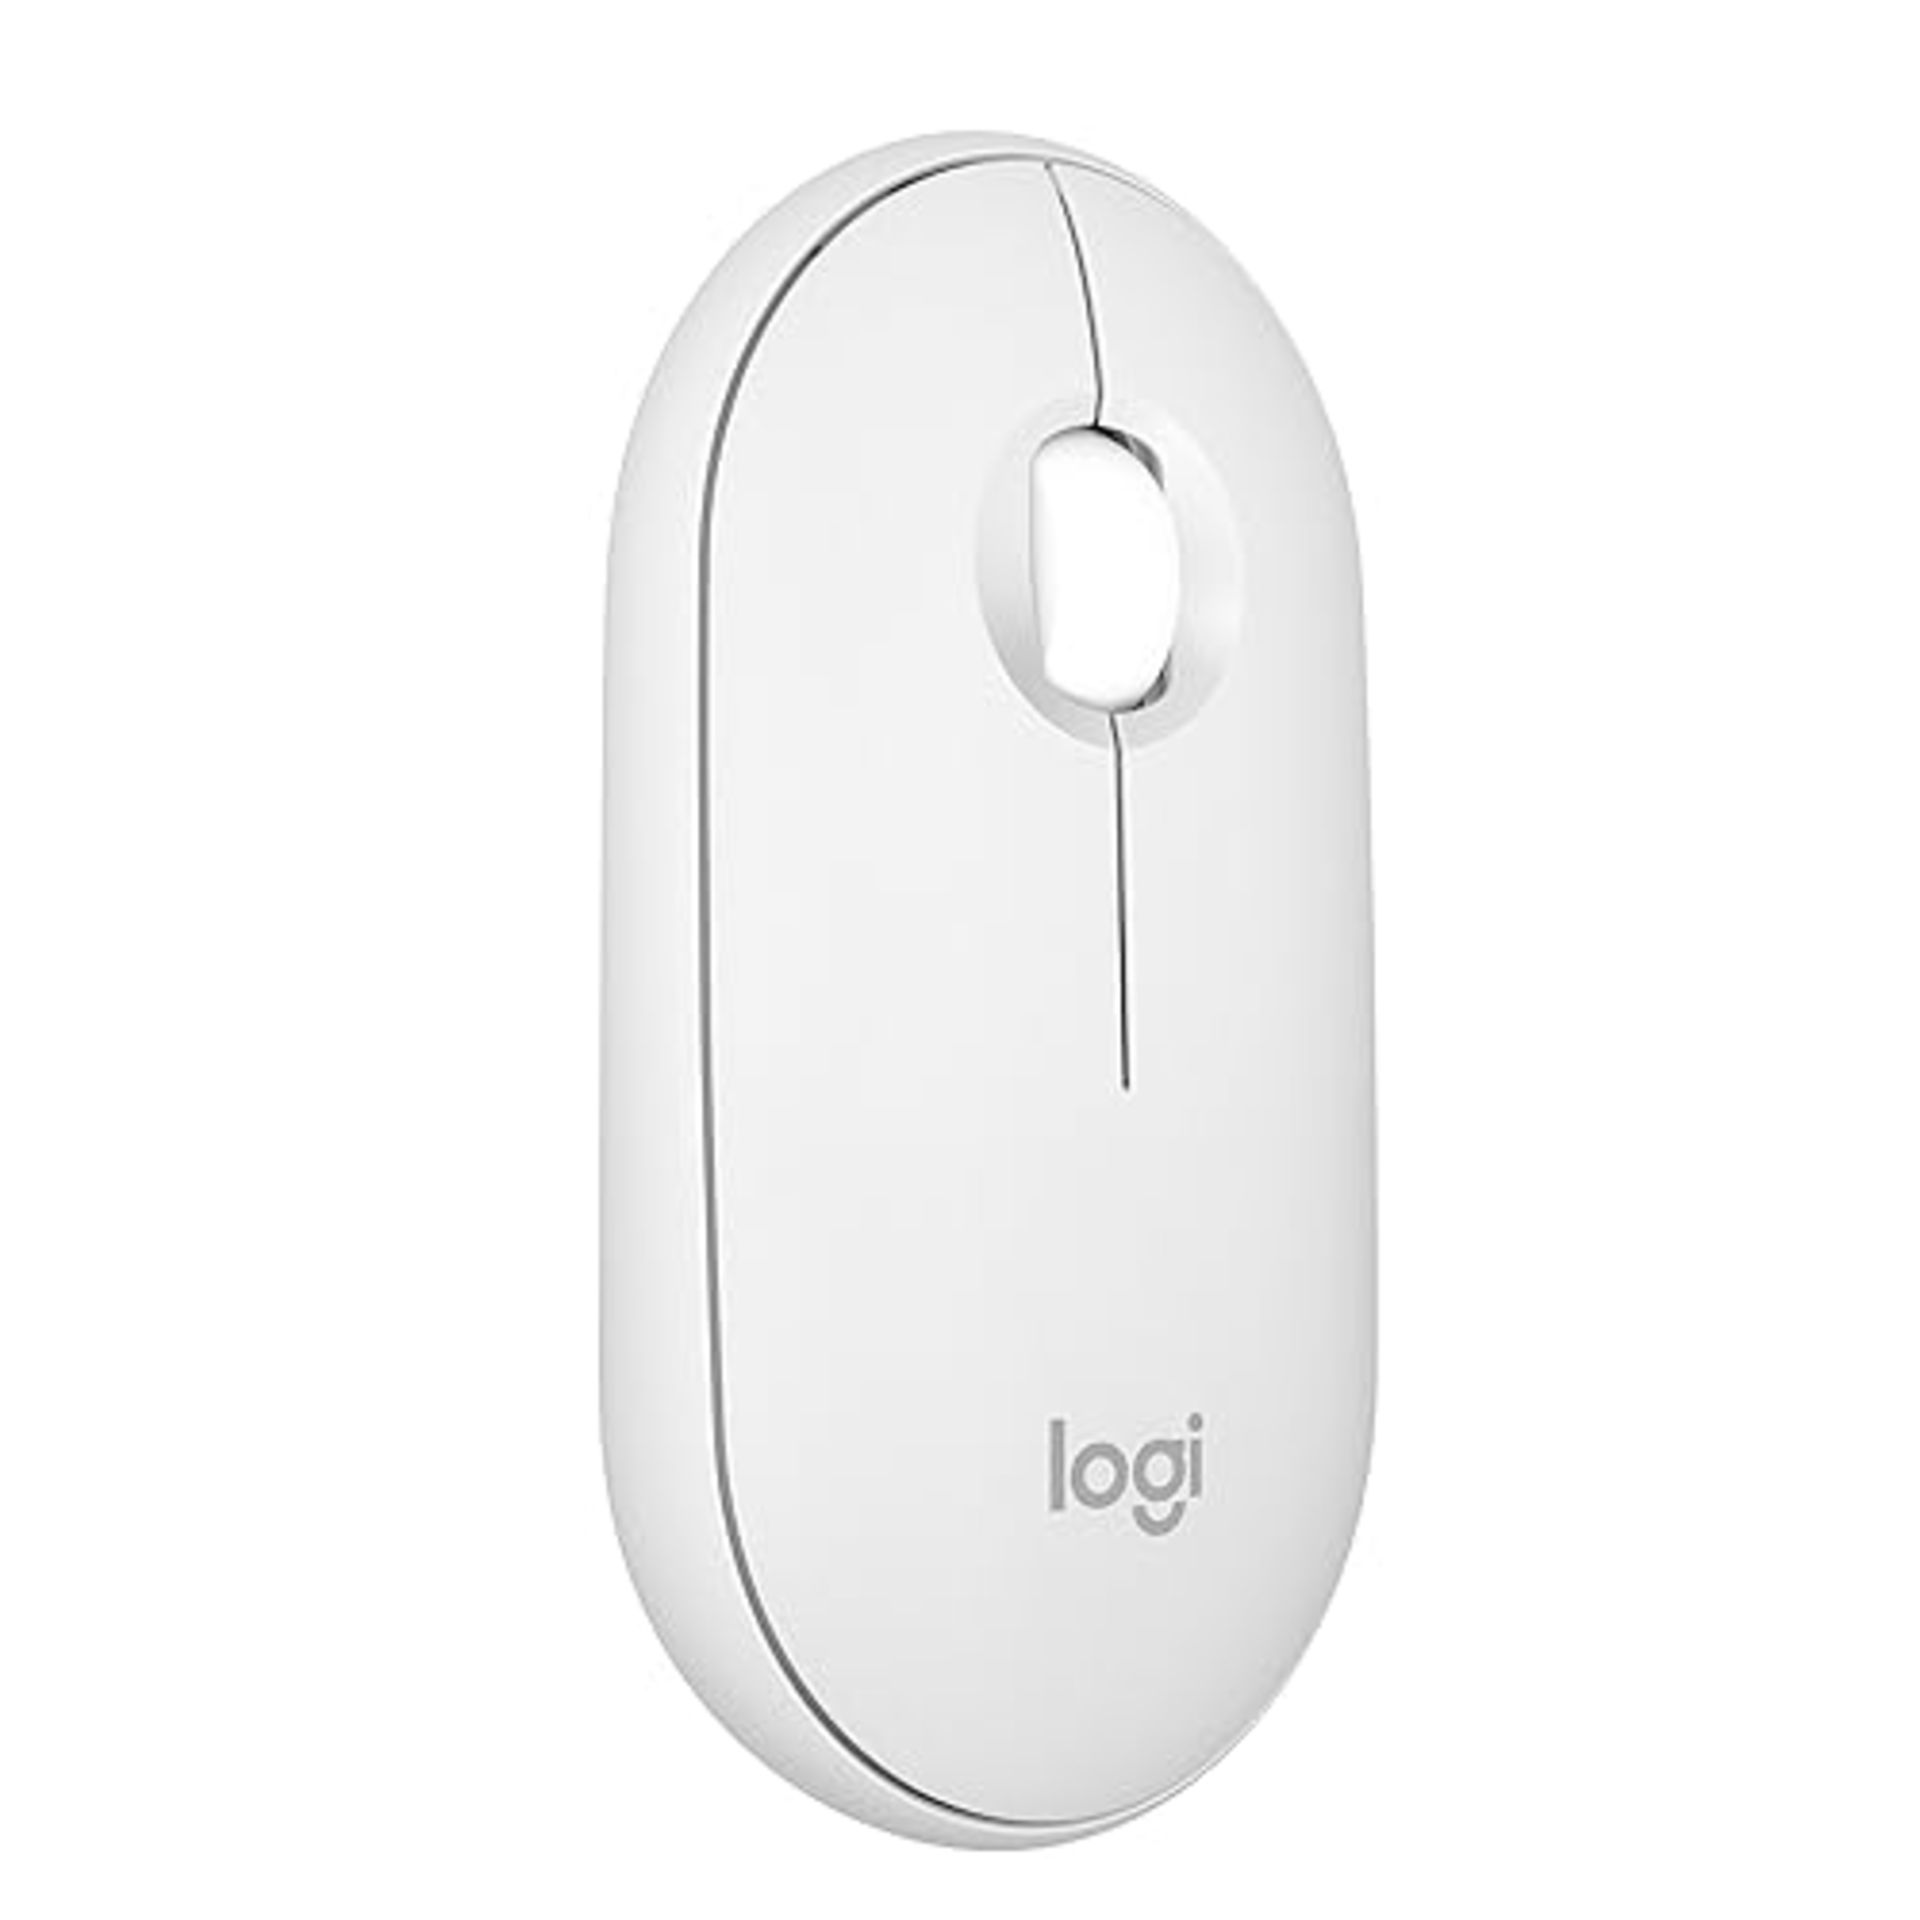 Logitech Pebble Mouse 2 M350 is a slim, portable, lightweight, customizable wireless B